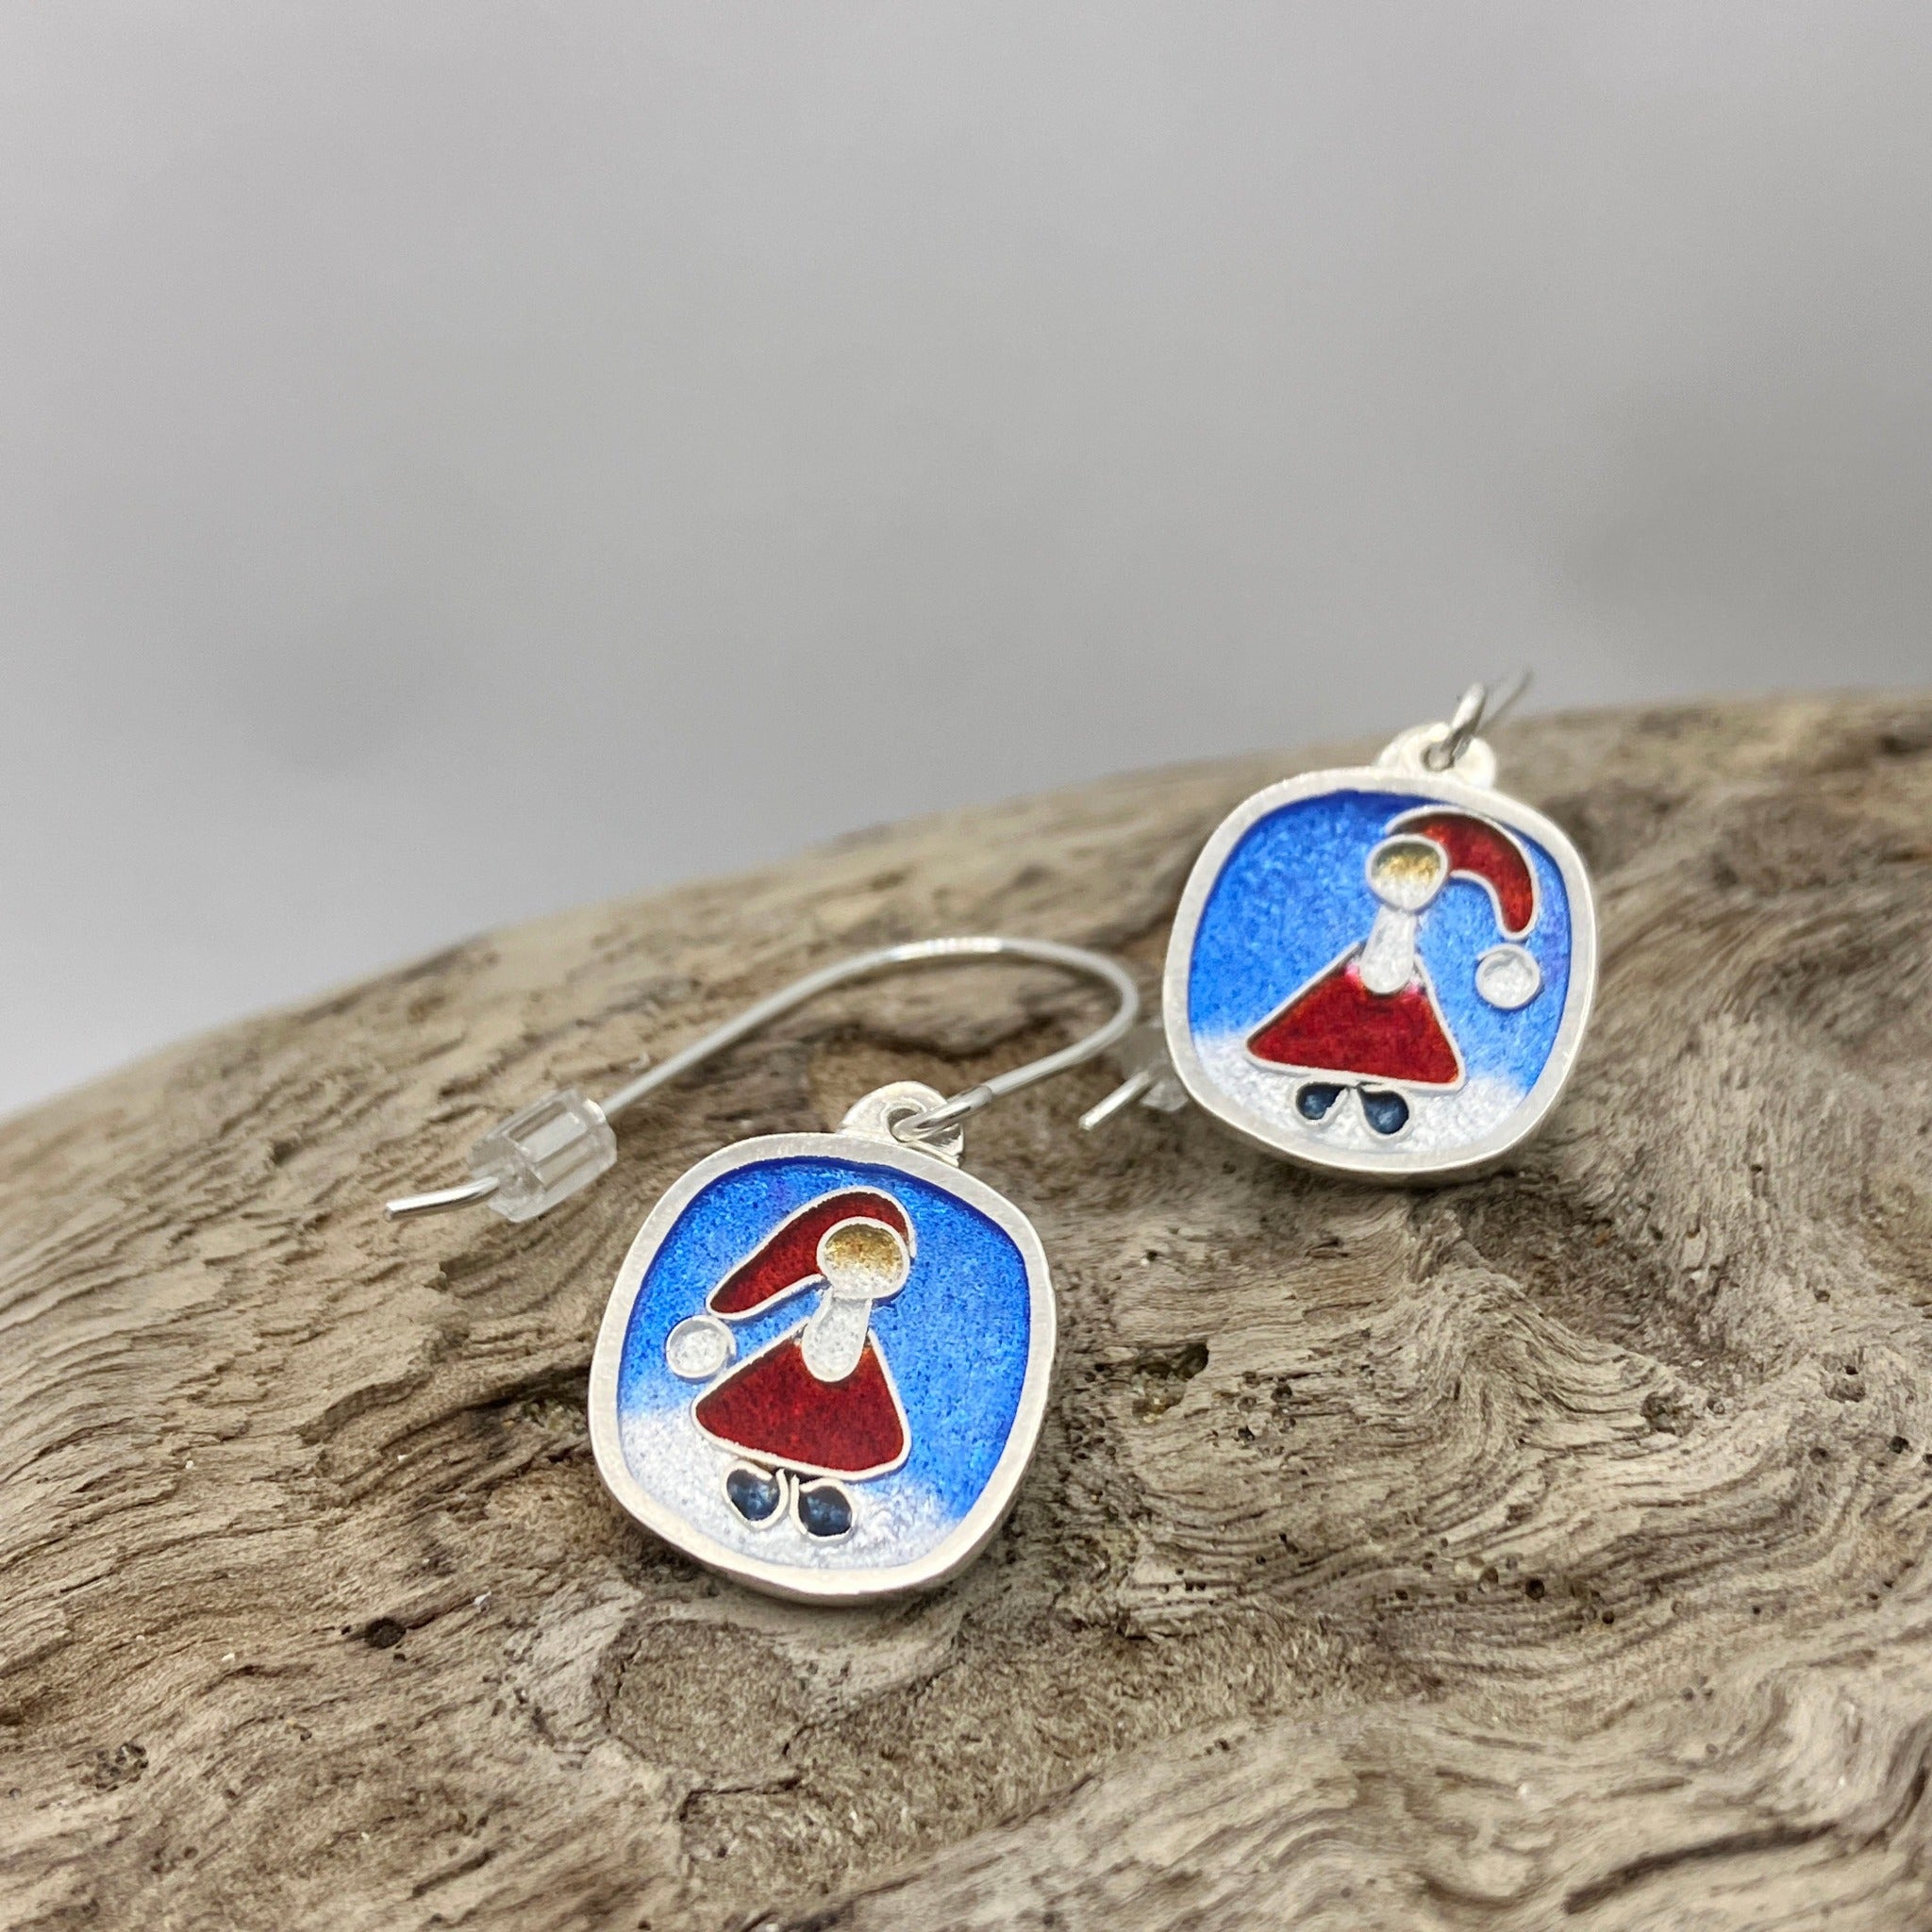 Cloisonne Santa earrings handmade by Laura Haszard